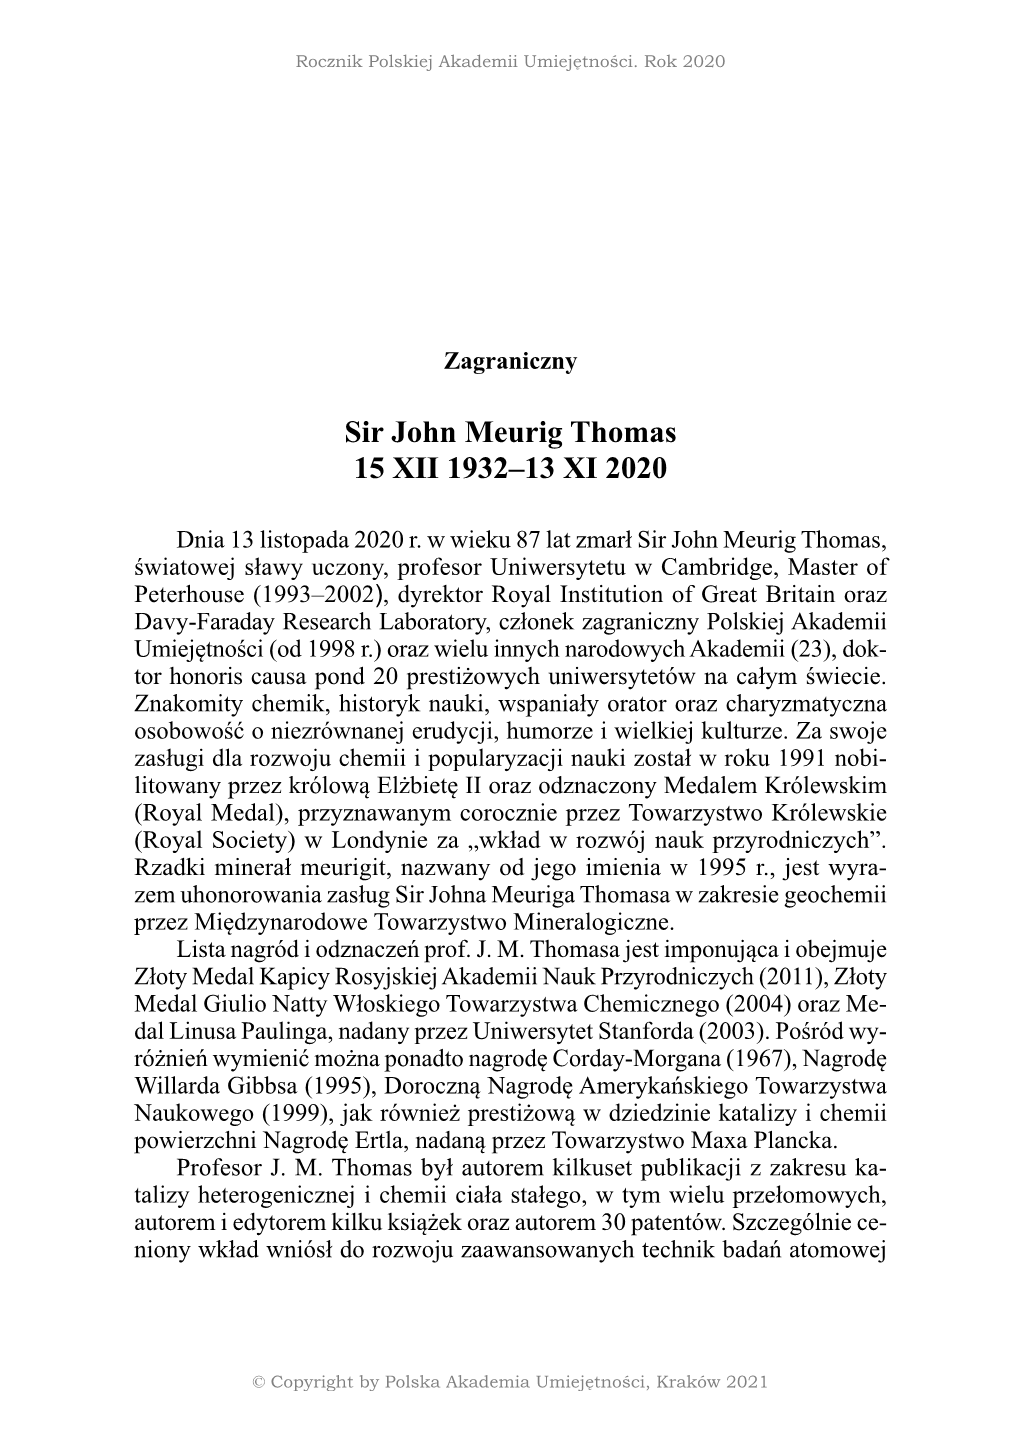 Sir John Meurig Thomas 15 XII 1932–13 XI 2020